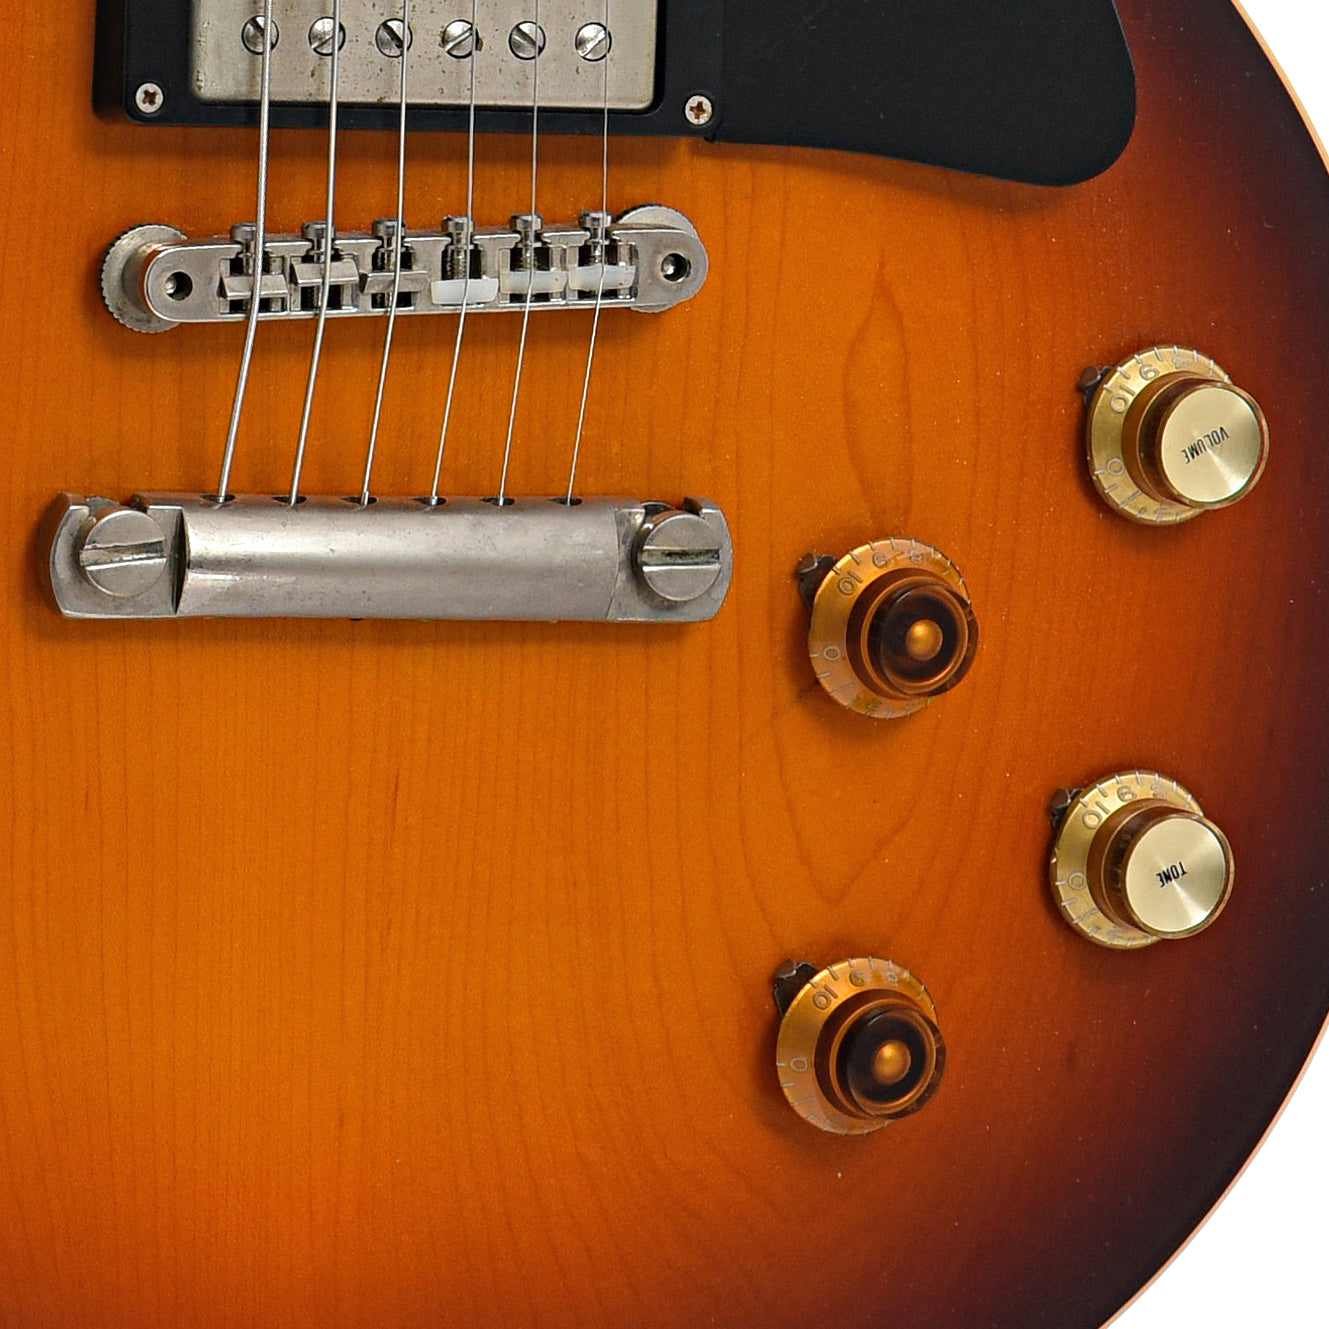 tailpiece, Bridge and controls of Gibson Joe Bonamassa Les Paul Electric Guitar (2011)